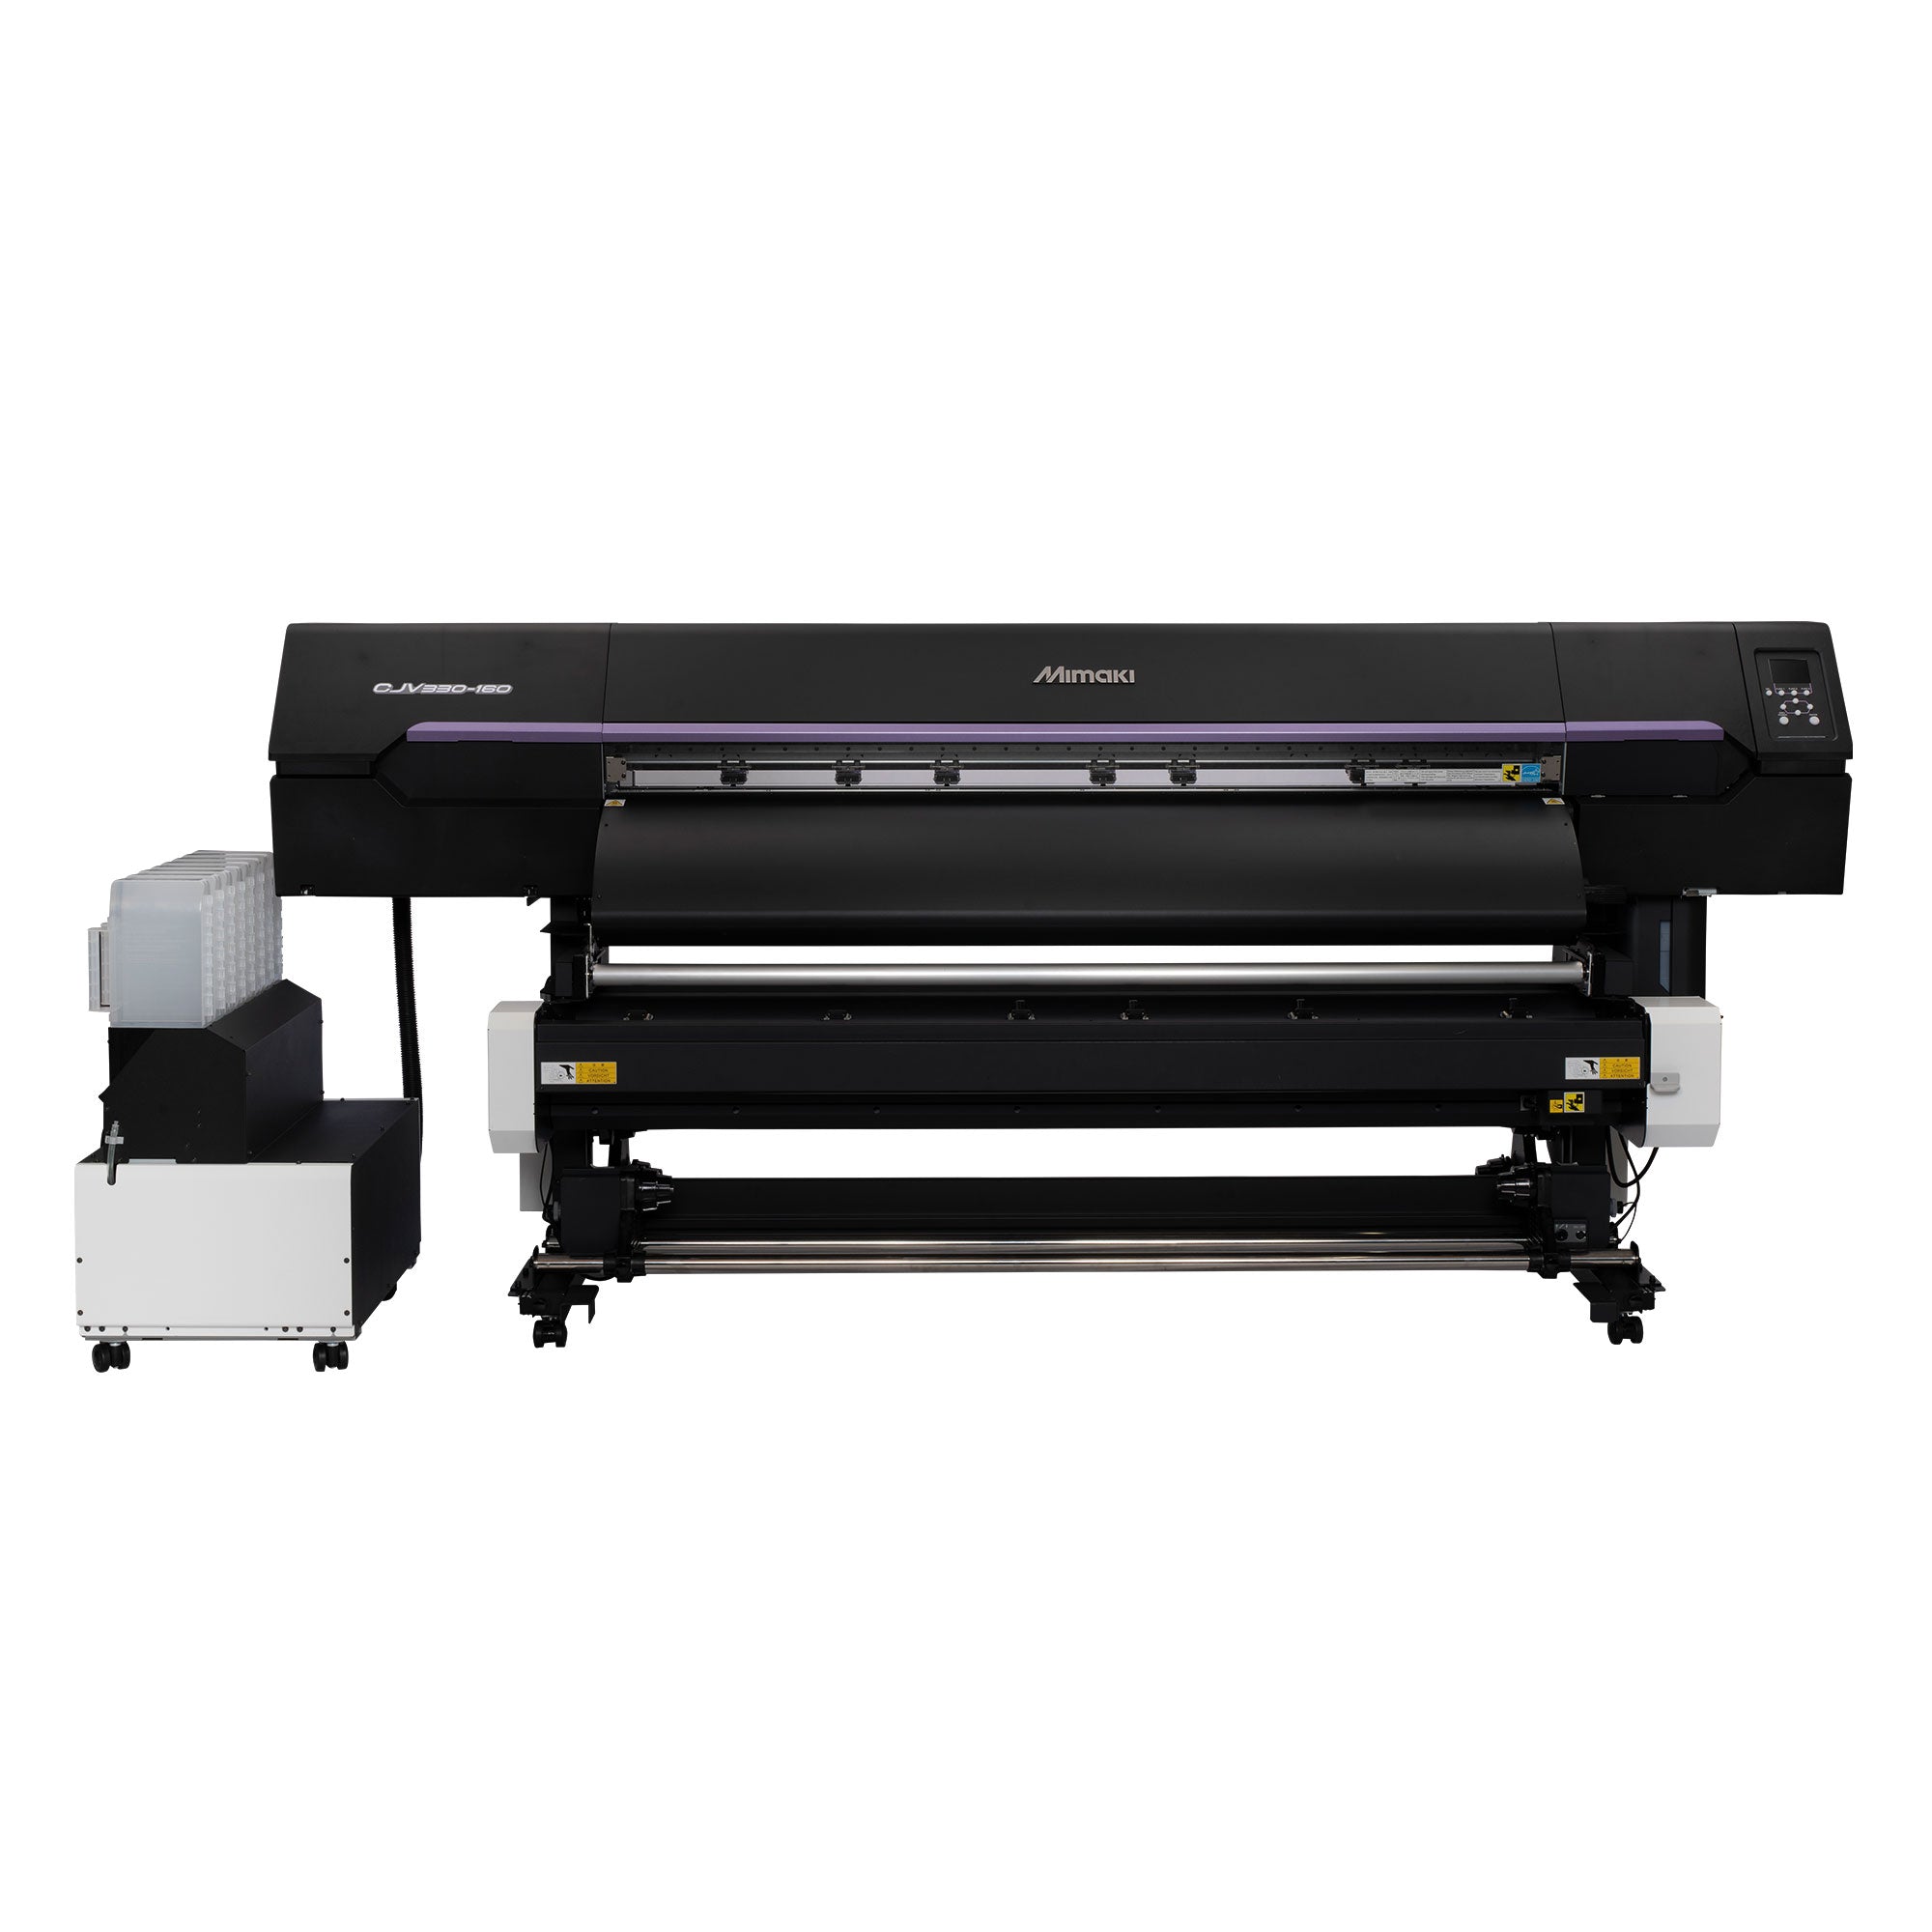 Mimaki CJV330-160 Solvent Printer / Cutter